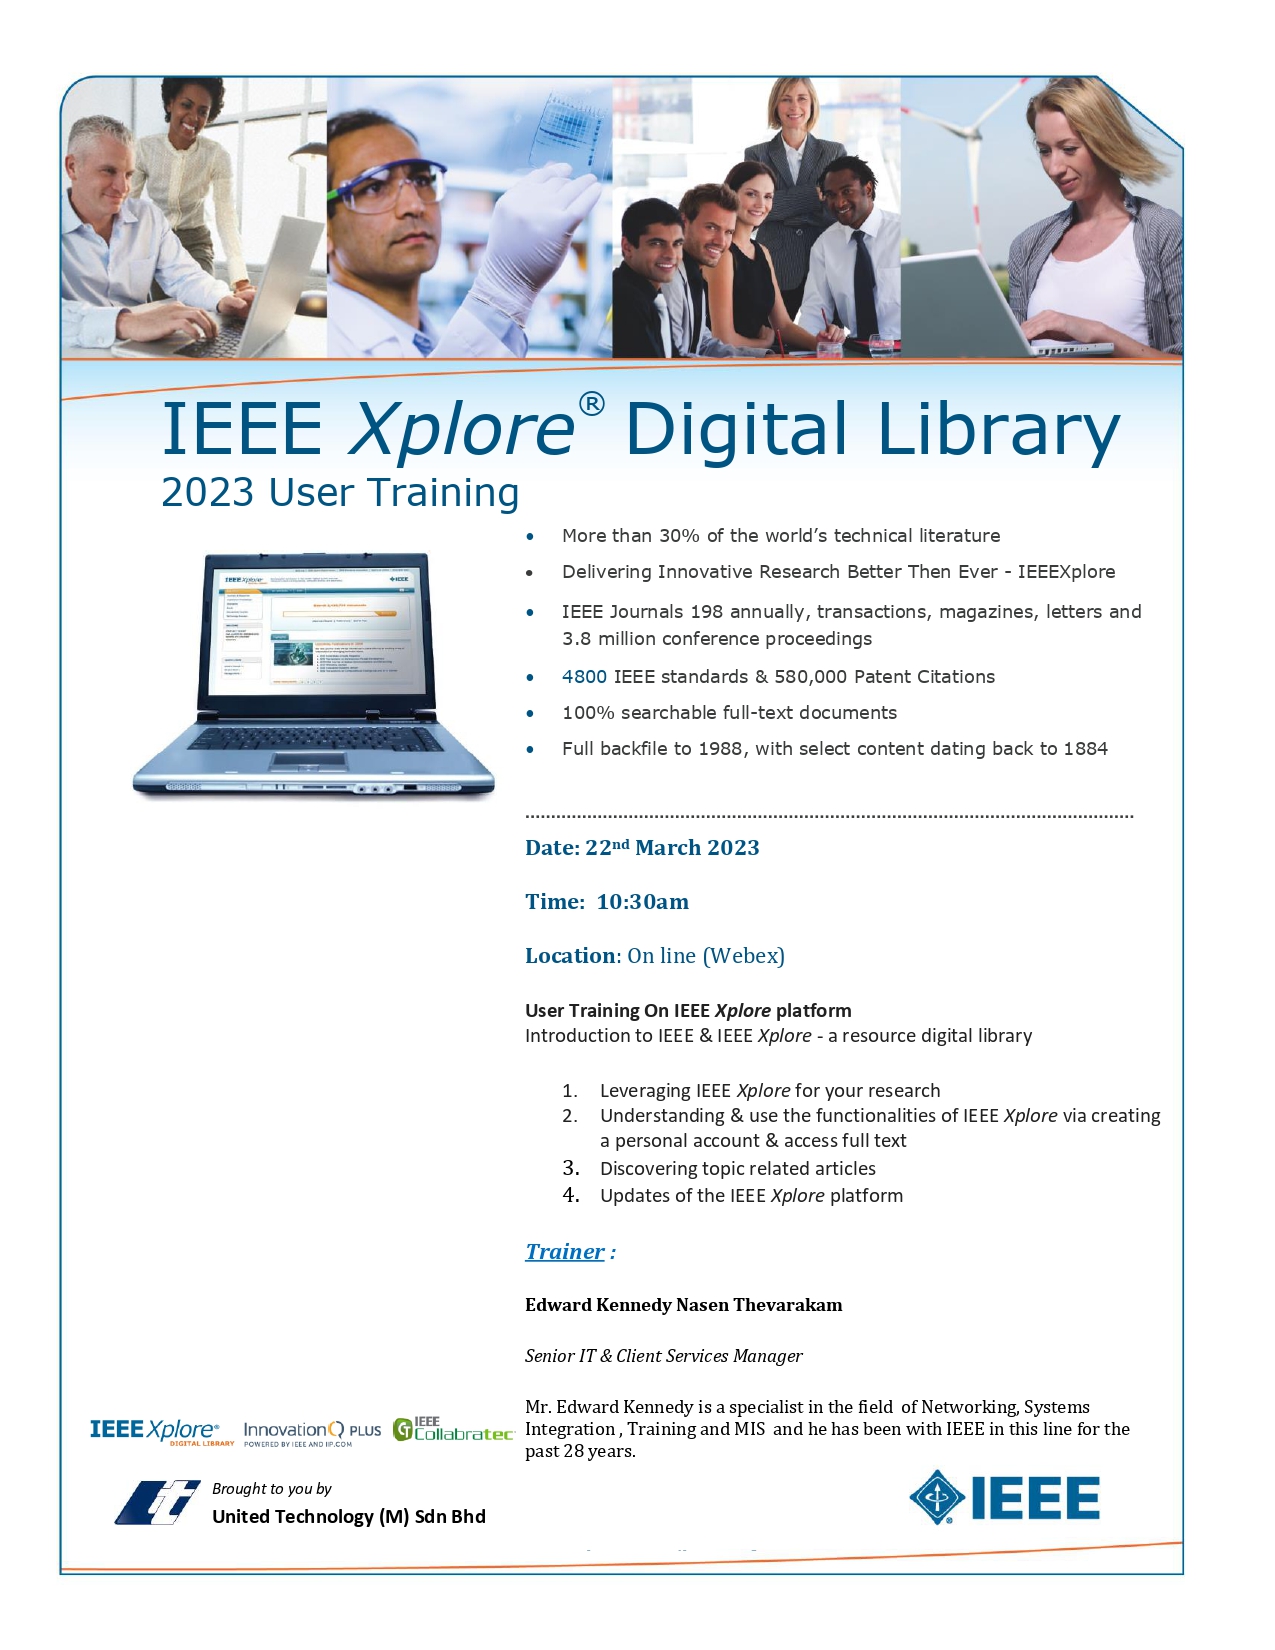 Kelas pendidikan pengguna : IEEE explore digital Library